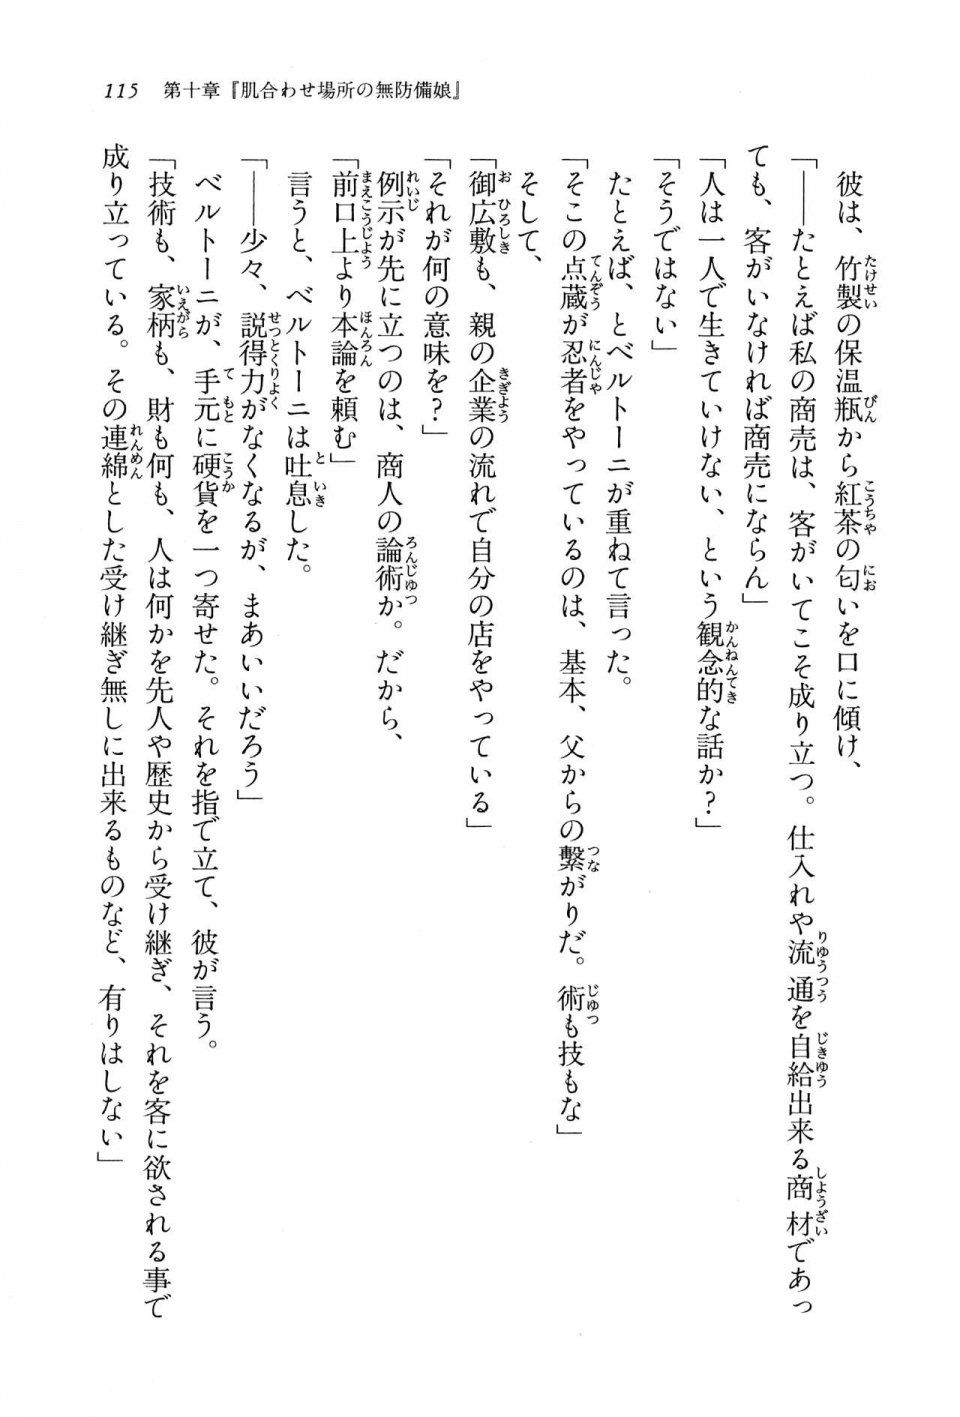 Kyoukai Senjou no Horizon BD Special Mininovel Vol 8(4B) - Photo #119